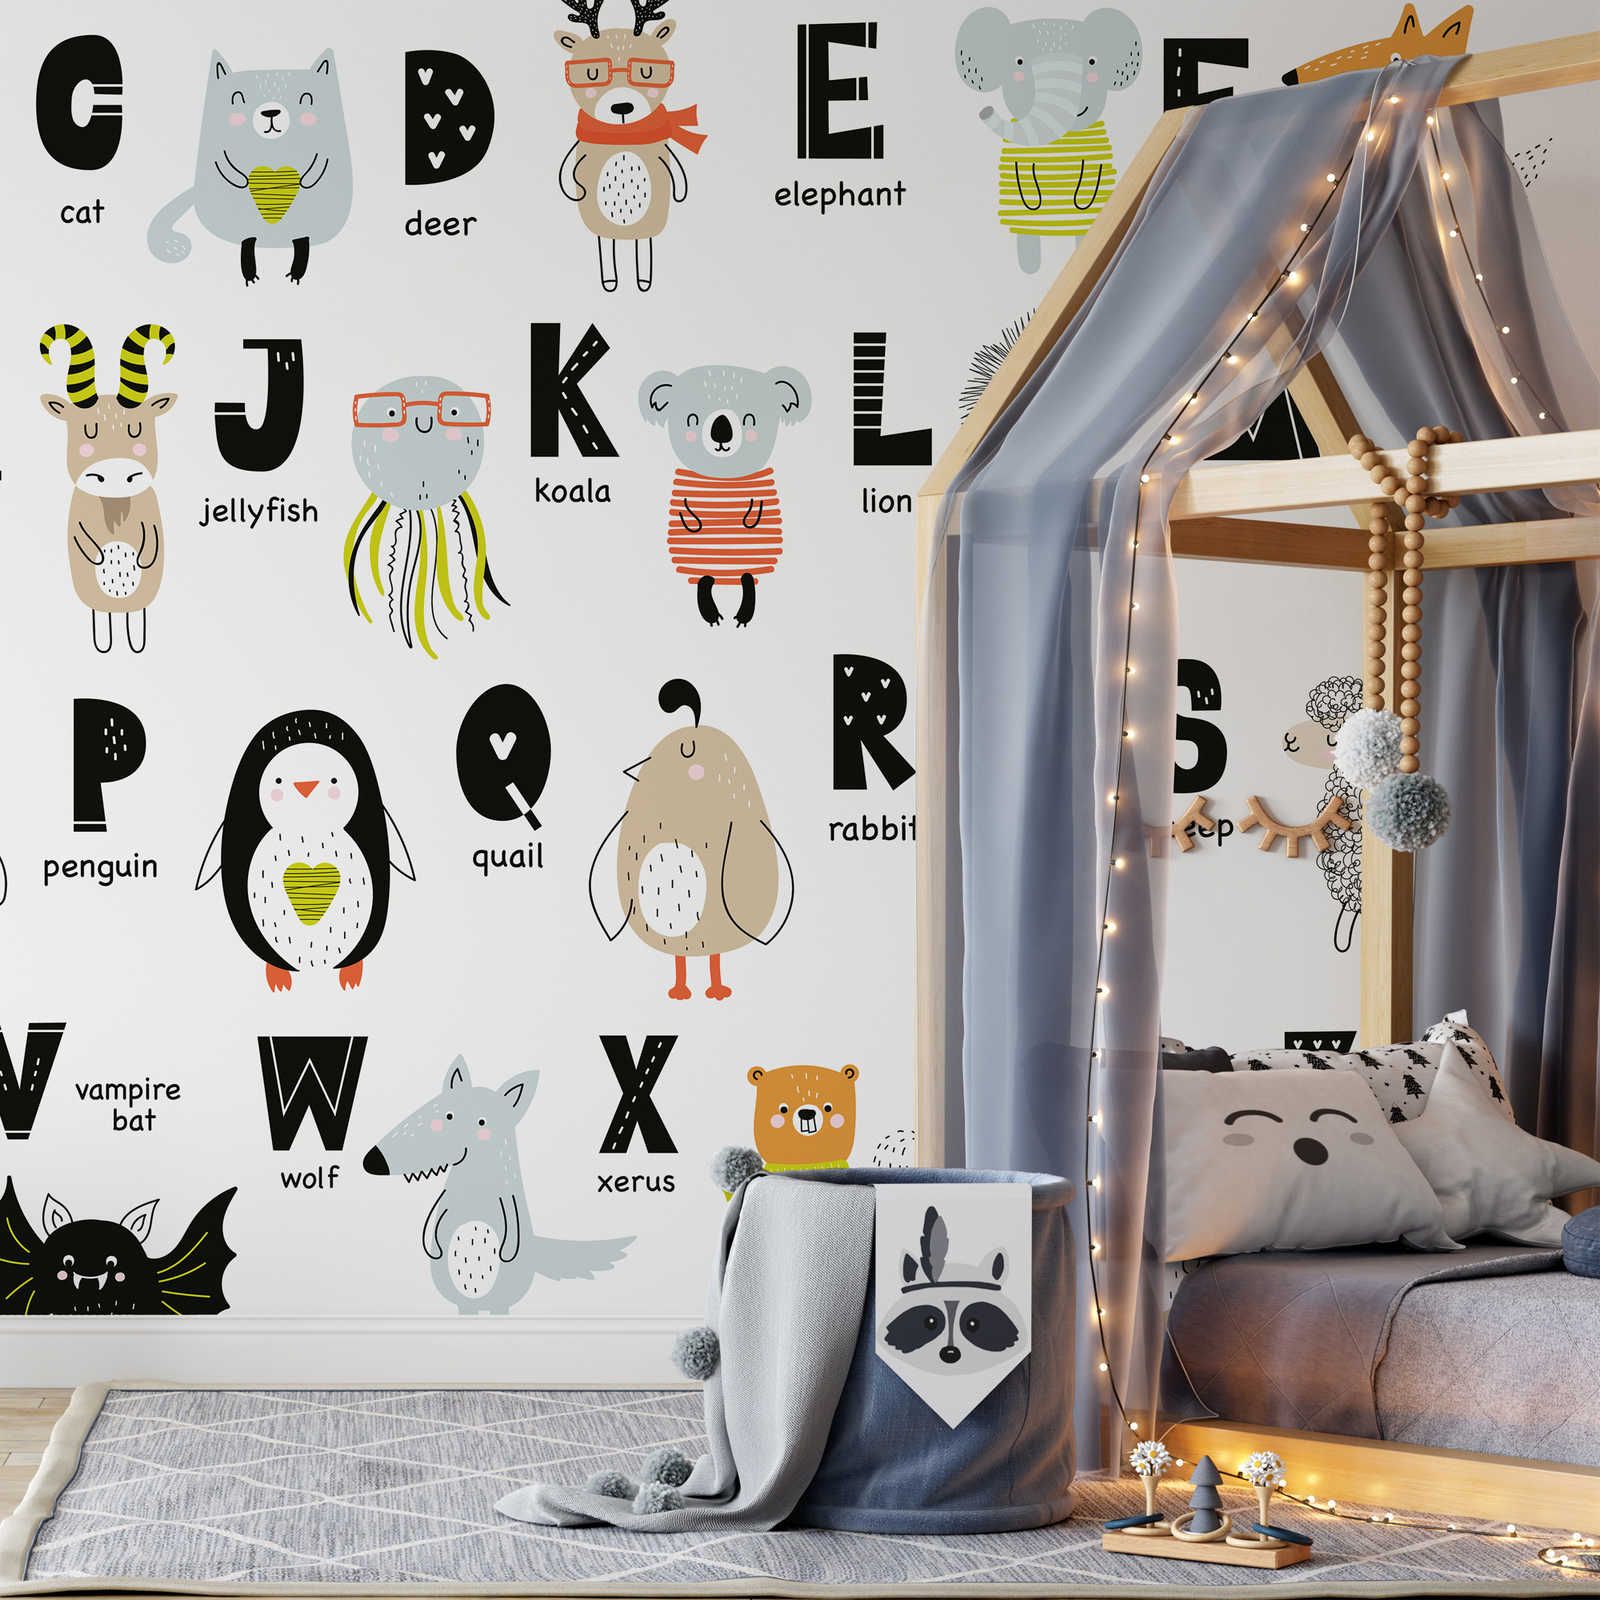 Photo wallpaper Alphabet with animals and animal names - Smooth & matt non-woven
